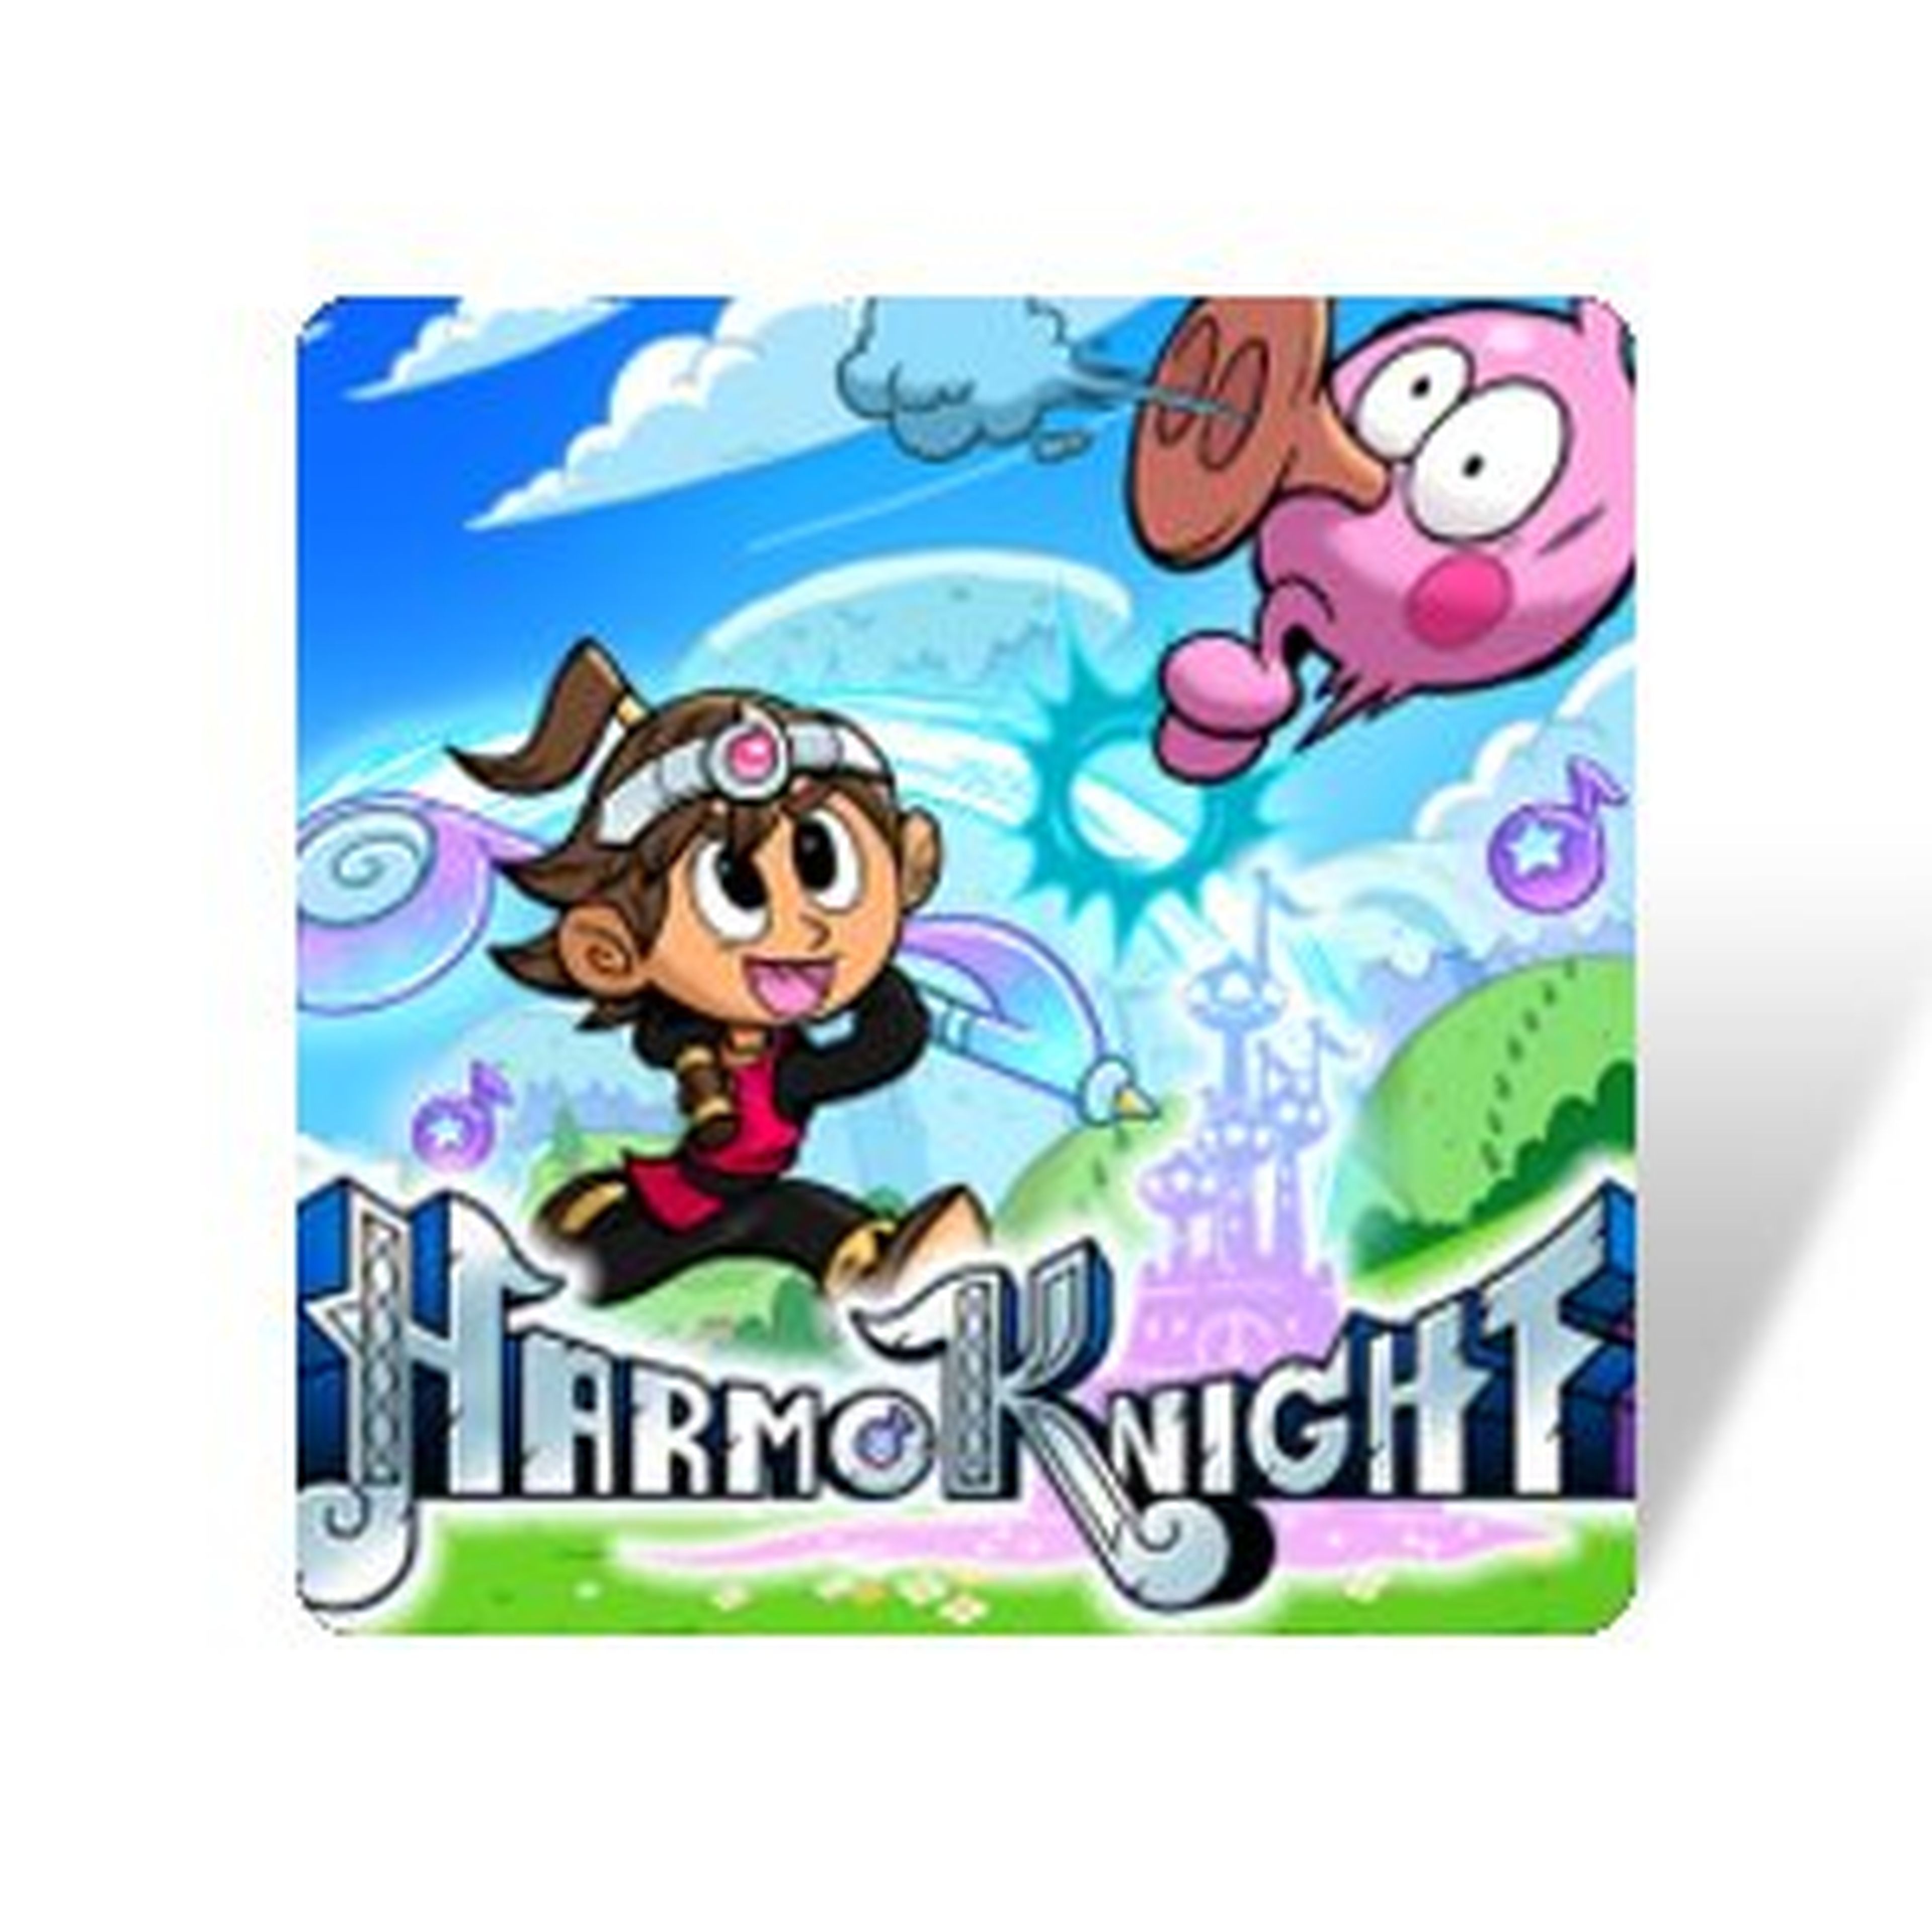 Harmoknight para 3DS